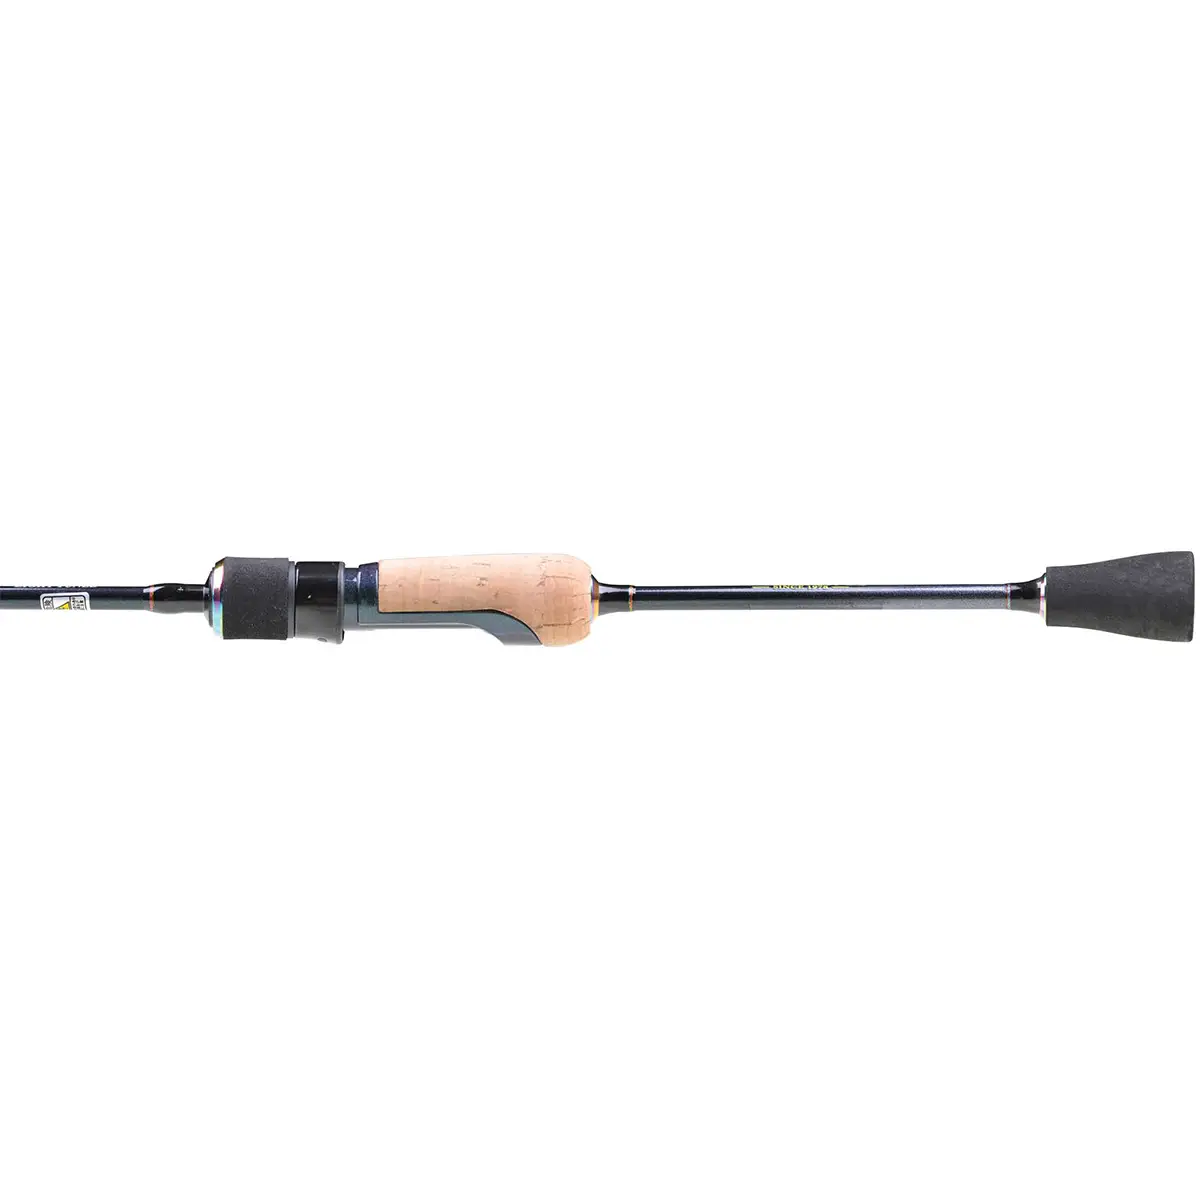 Seahawk Flexis Lite  Thrilling Ultralight Rod